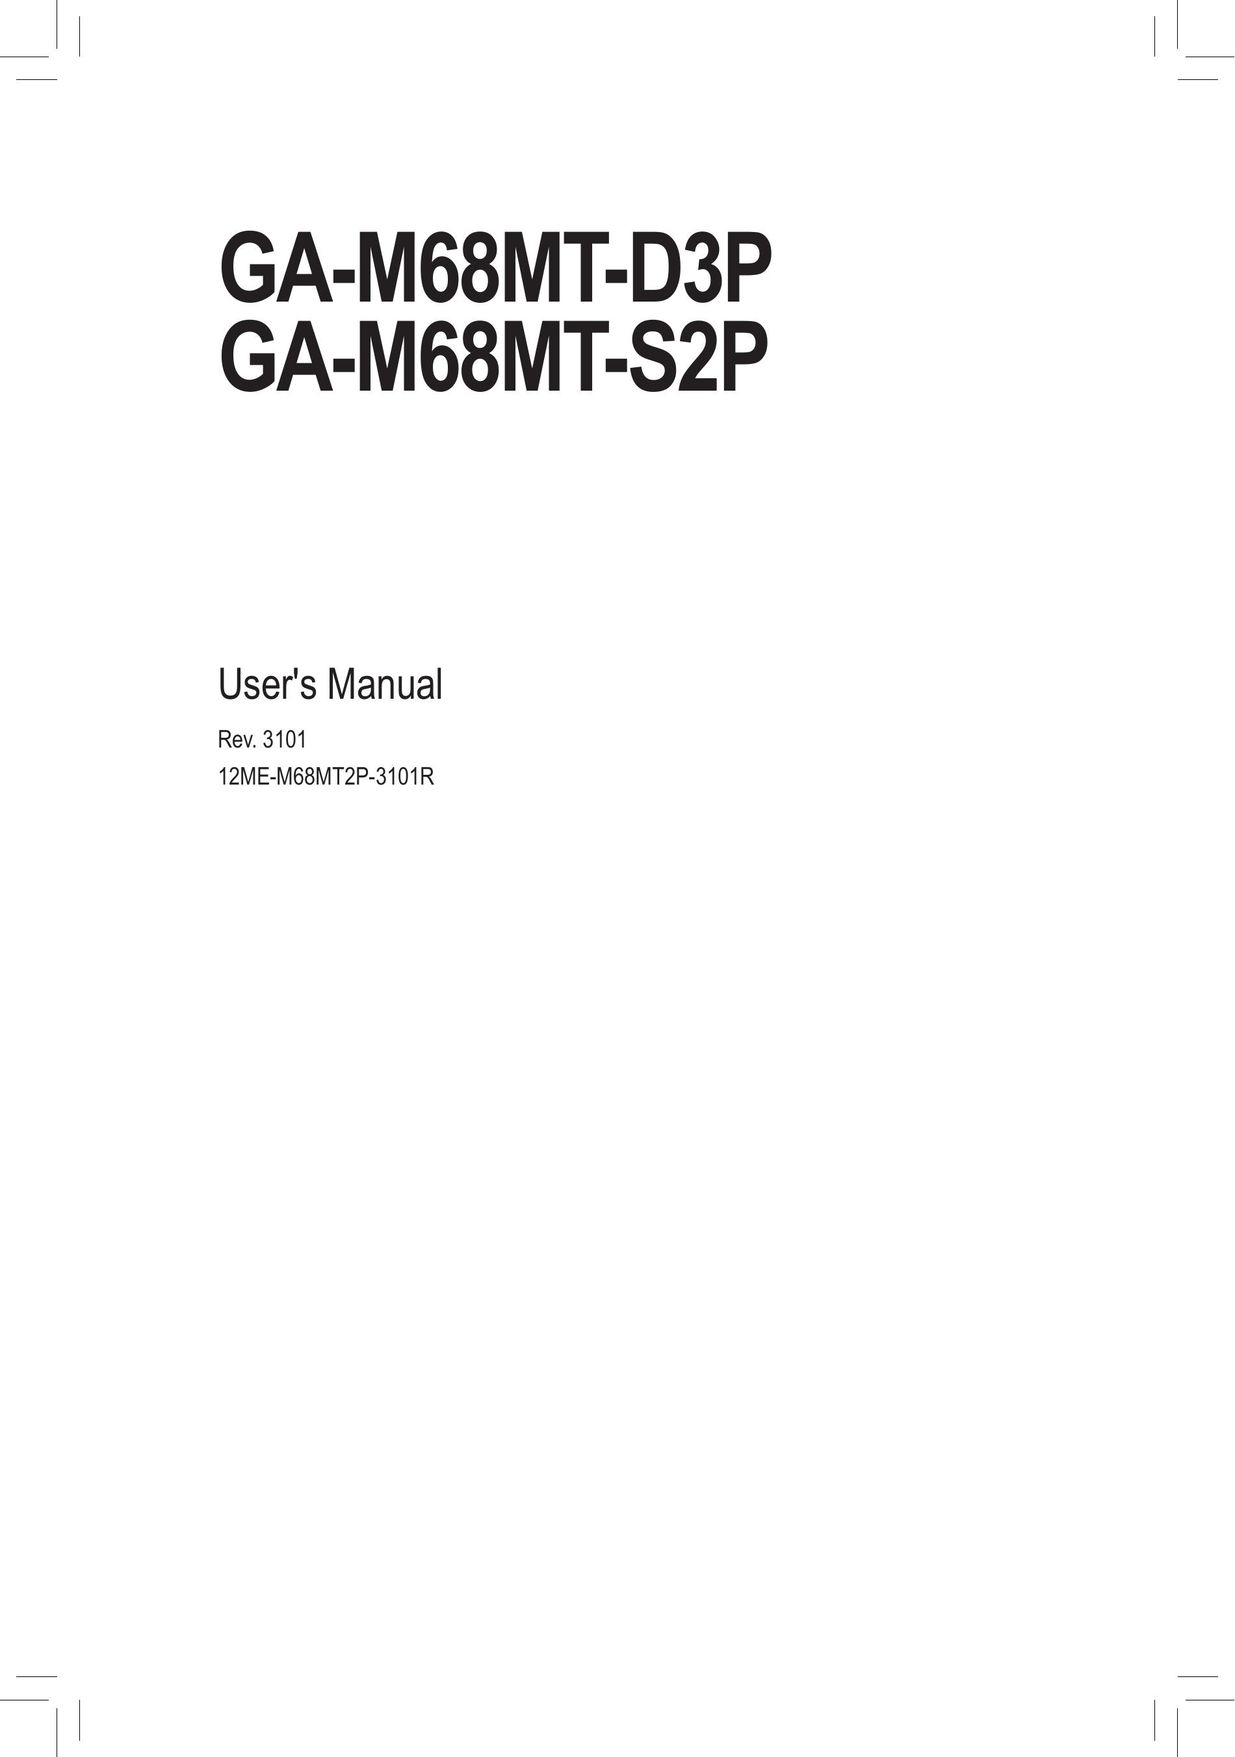 Gigabyte GA-M68MT-D3P Computer Hardware User Manual